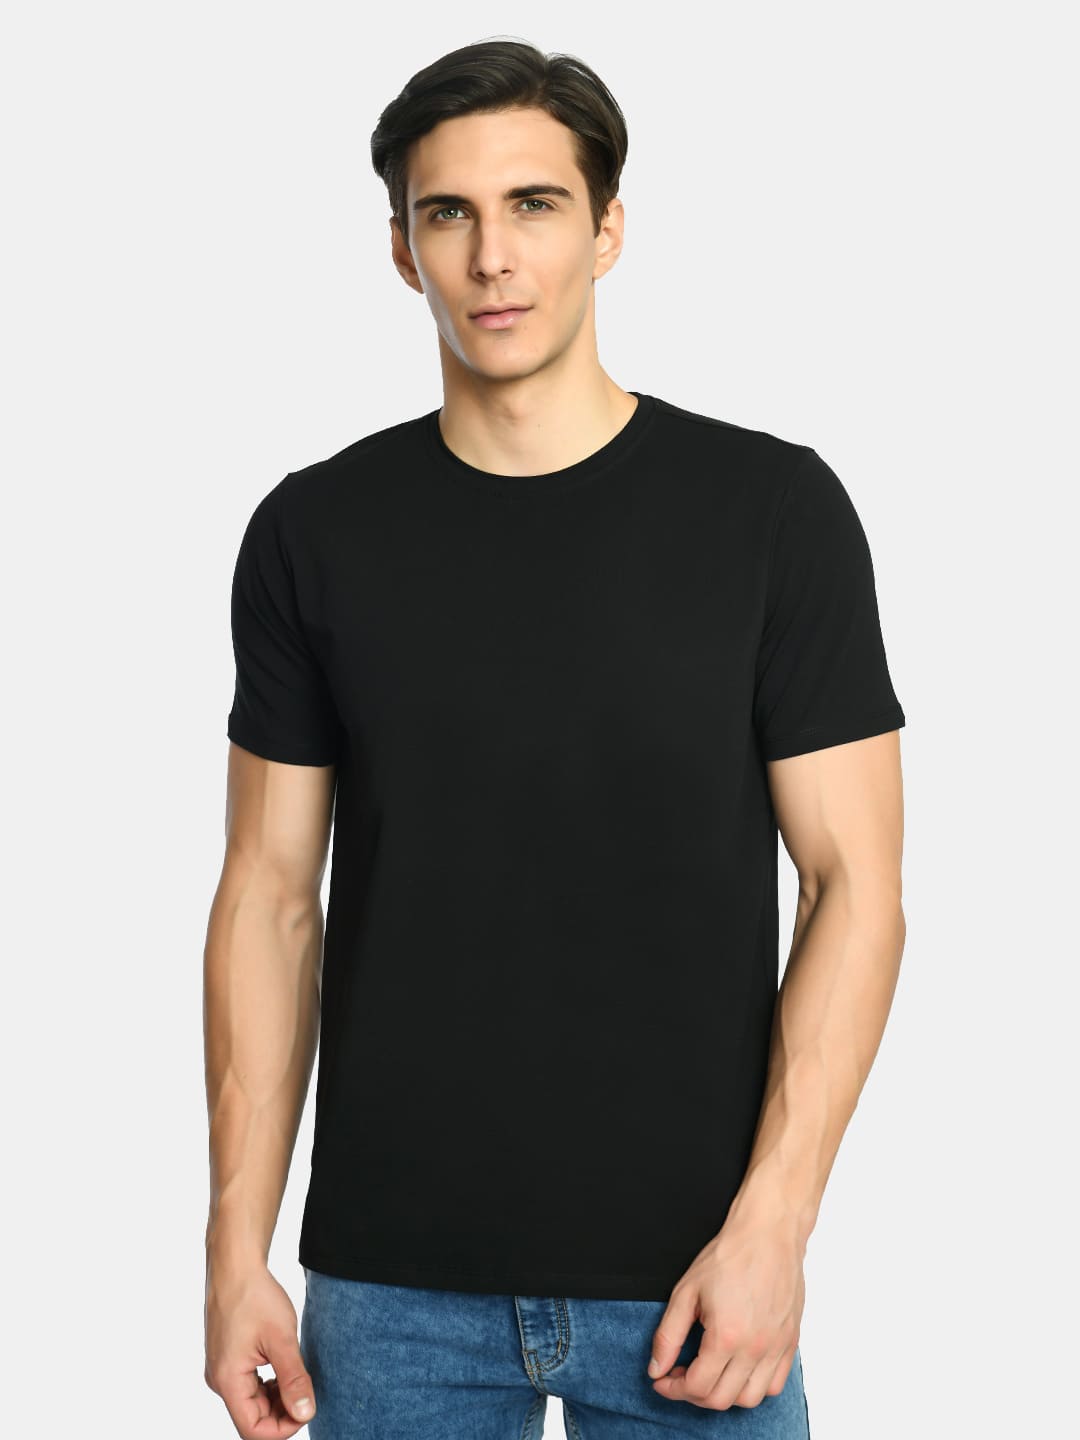 Men's Casual Ink Black Crew Neck T-Shirt